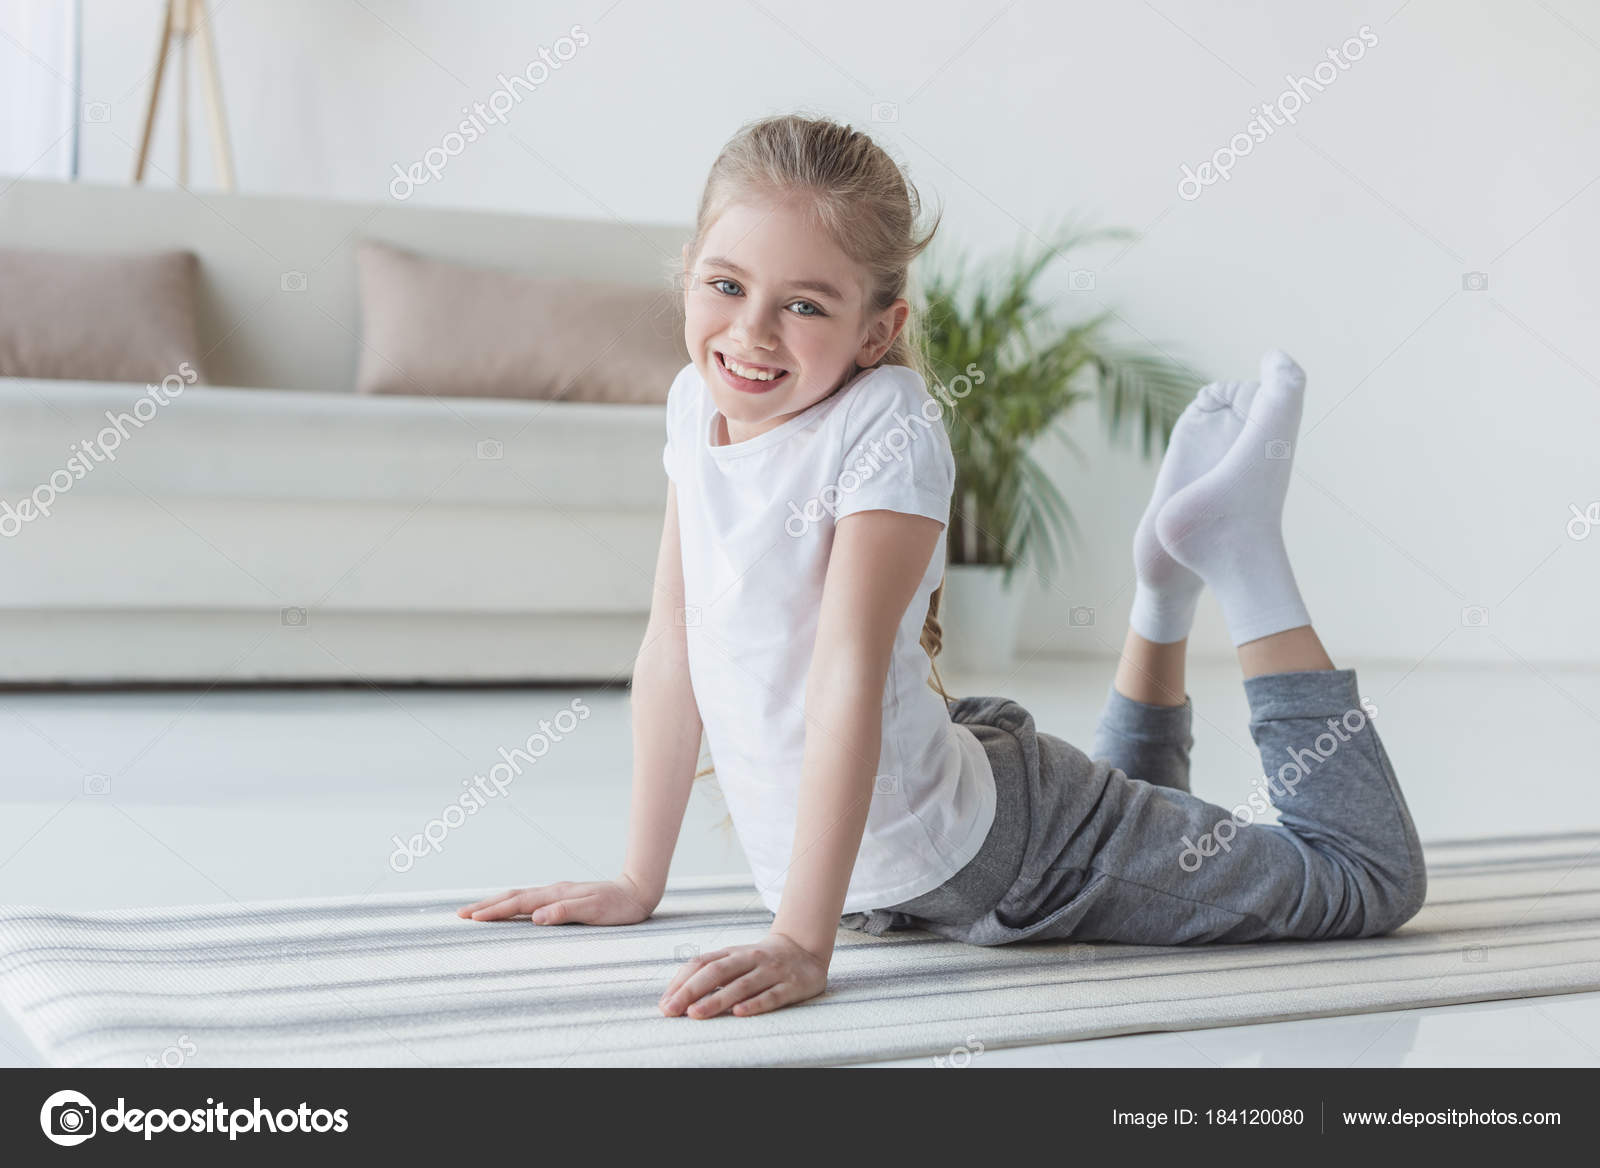 https://st3.depositphotos.com/12985790/18412/i/1600/depositphotos_184120080-stock-photo-happy-little-child-doing-backbend.jpg